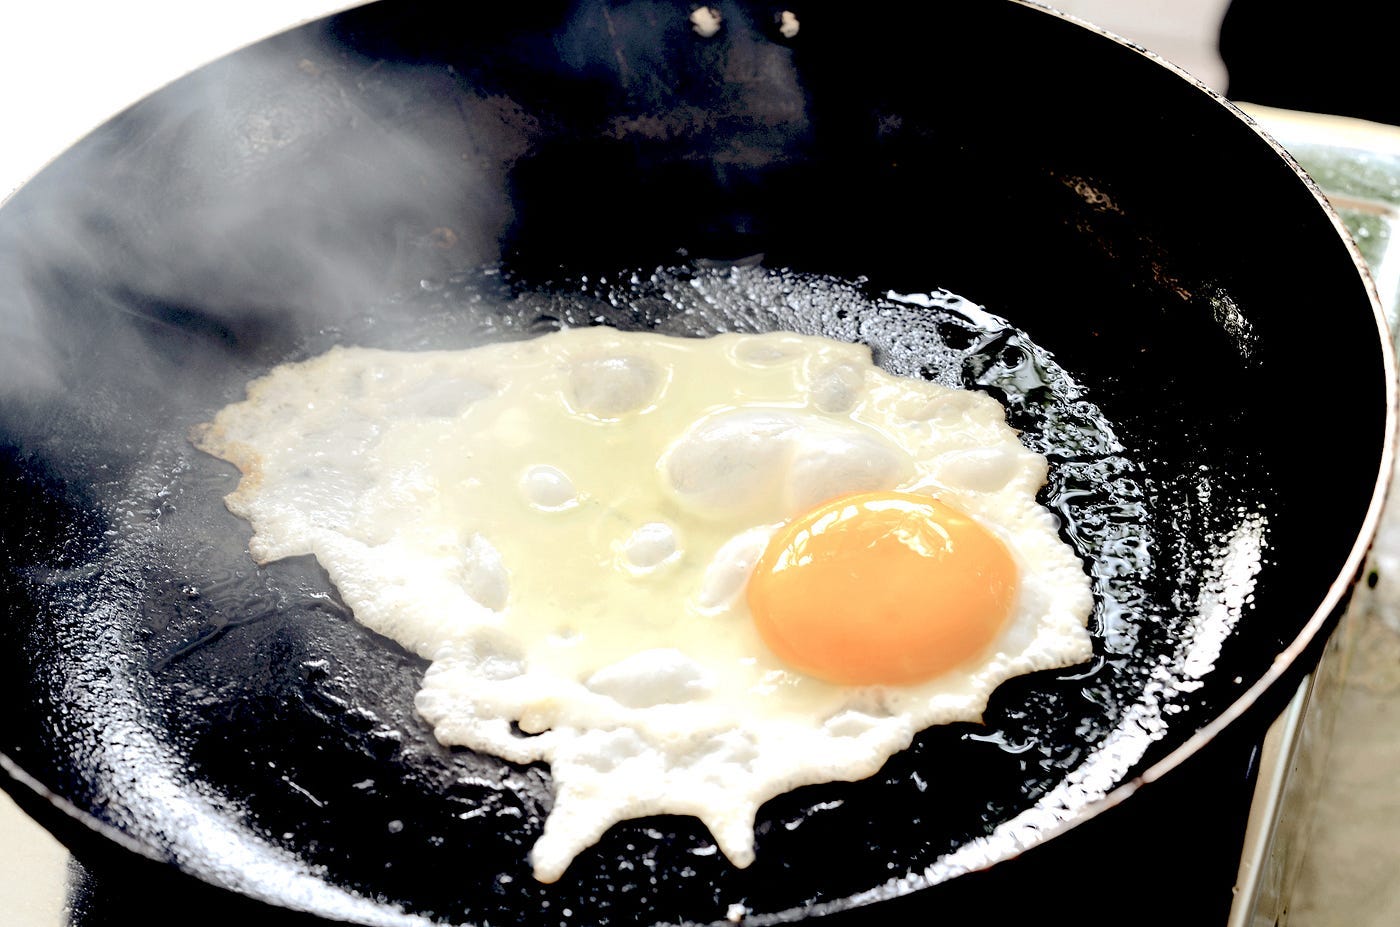 Egg frying in pan with smoke emerging.